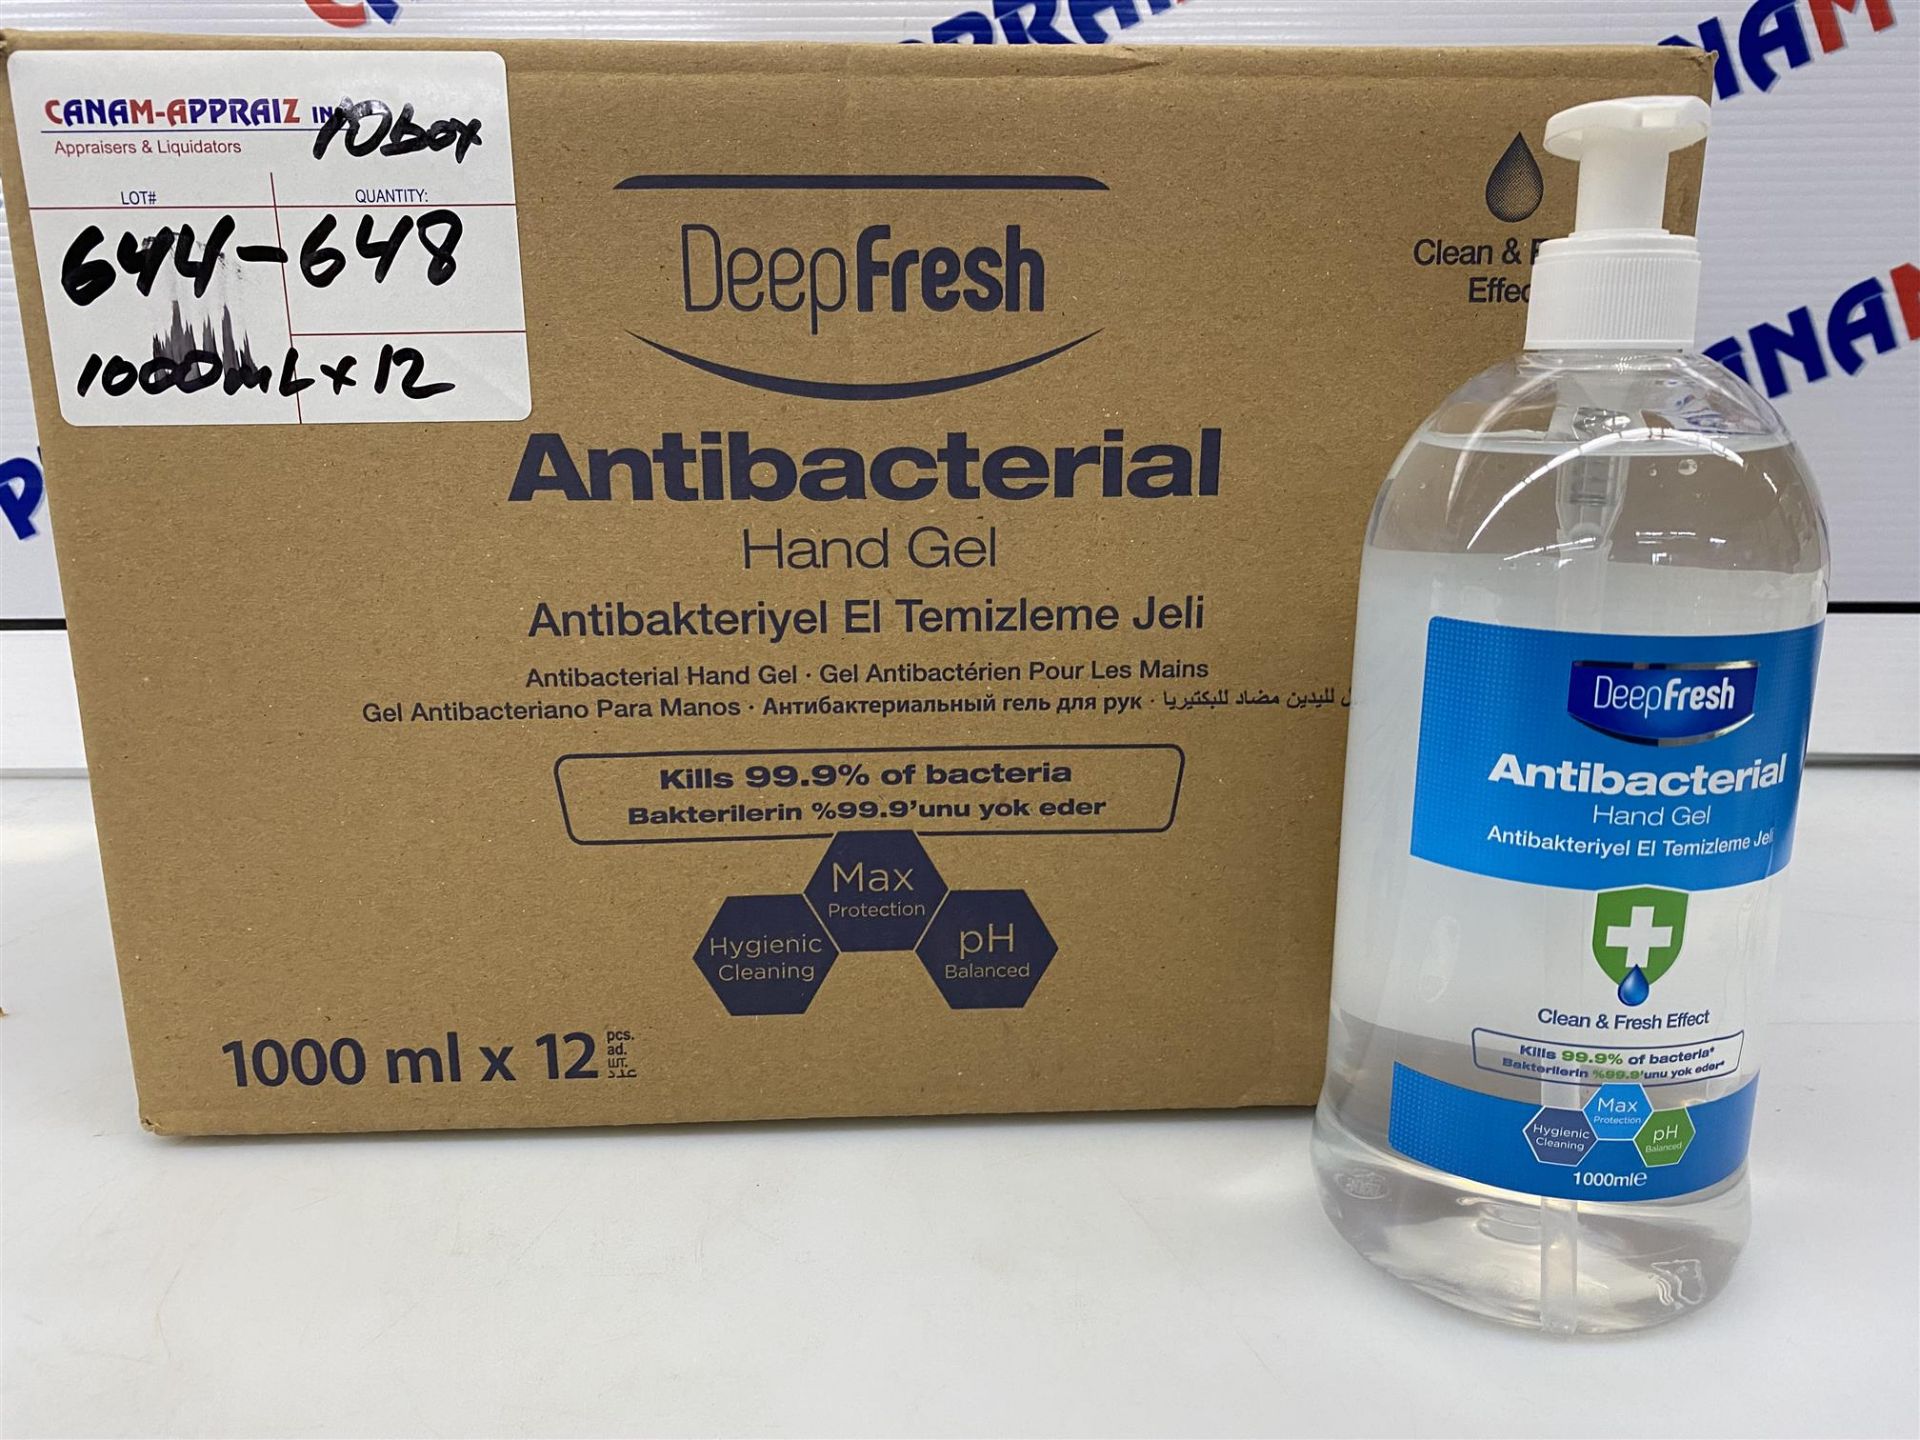 Deep Fresh - Antibacterial Hand Gel - 1000ml x 12/box - 10BOXES